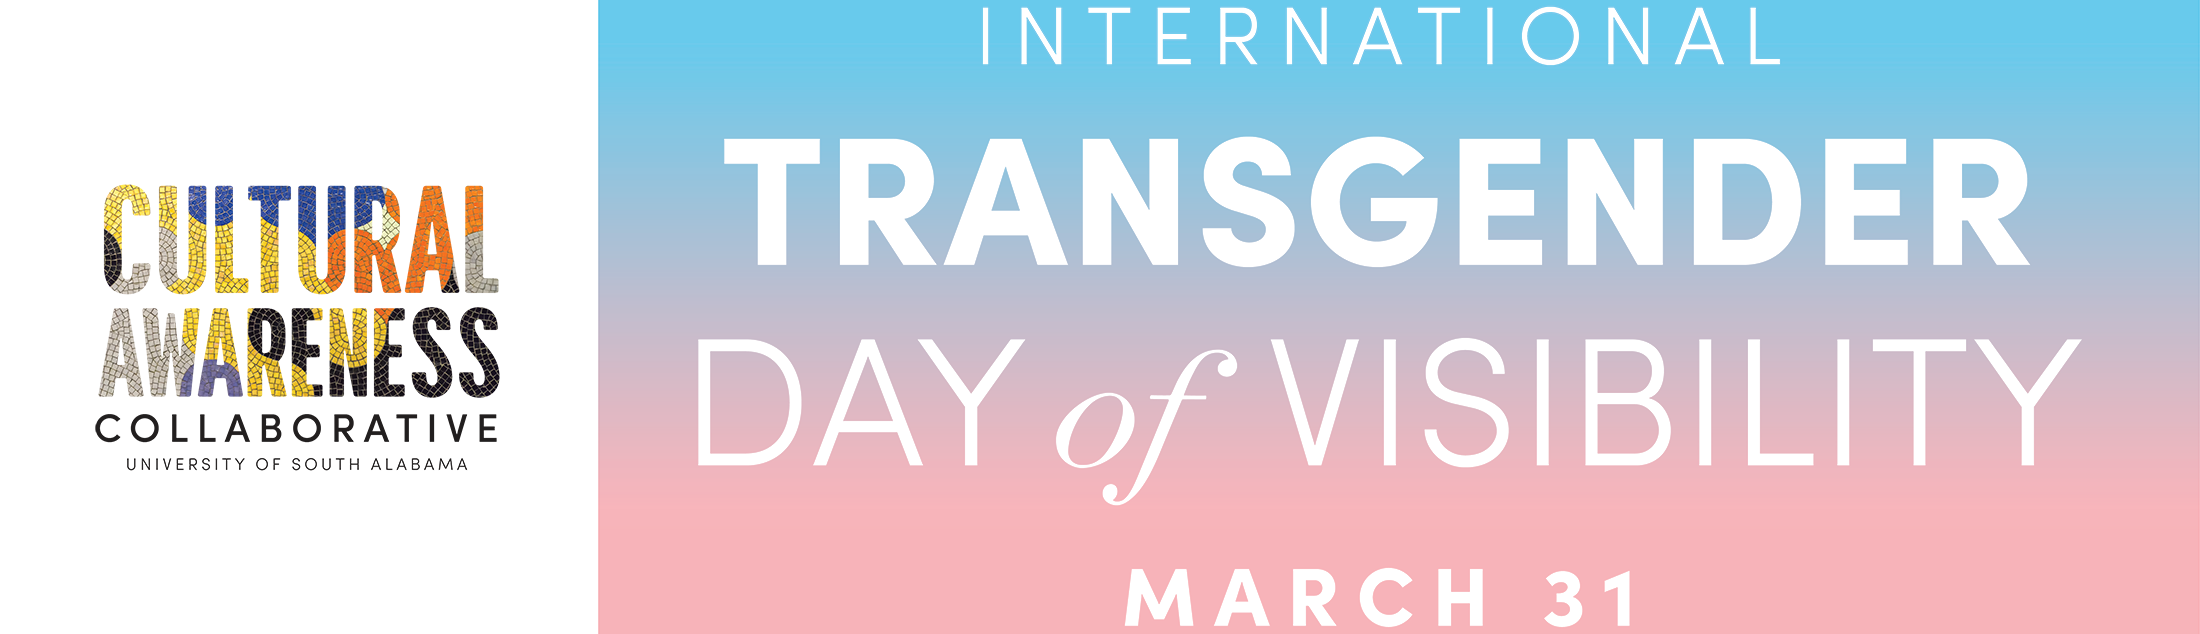 International Transgender Day of Visibility March 31